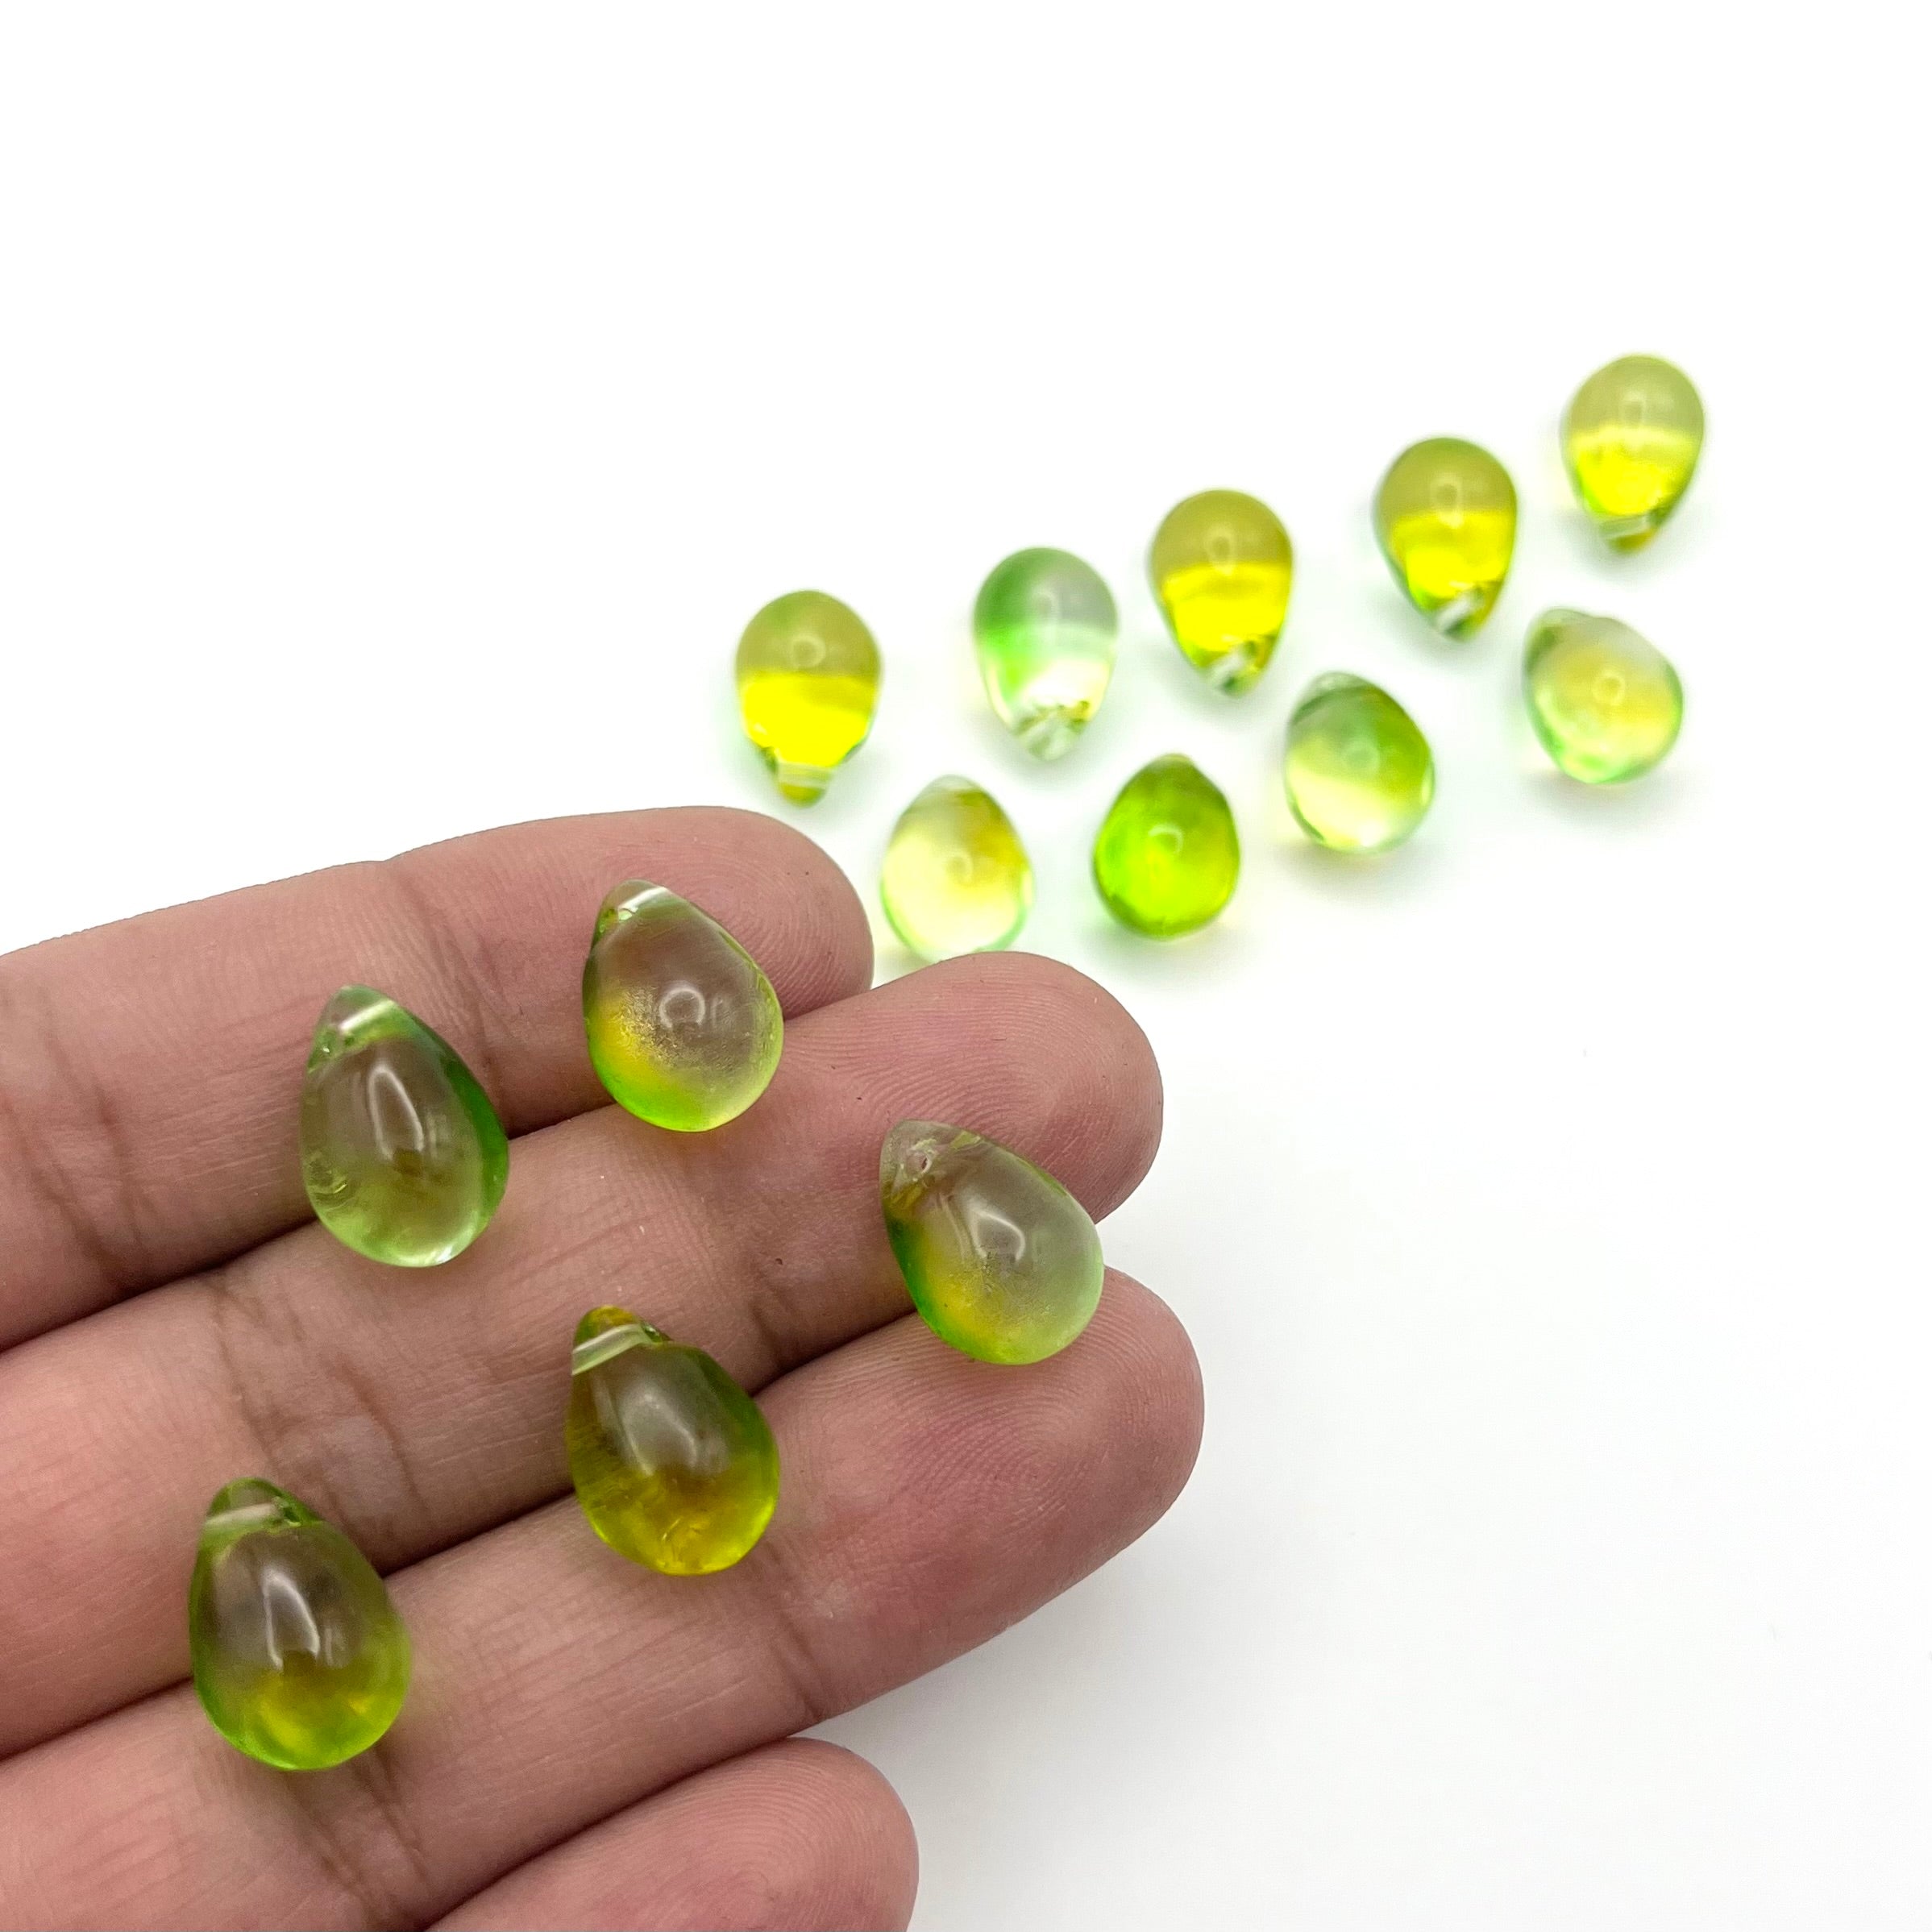 .5 Inch Yellow & Green Duo Tone Glass Teardrop Bead 15pk